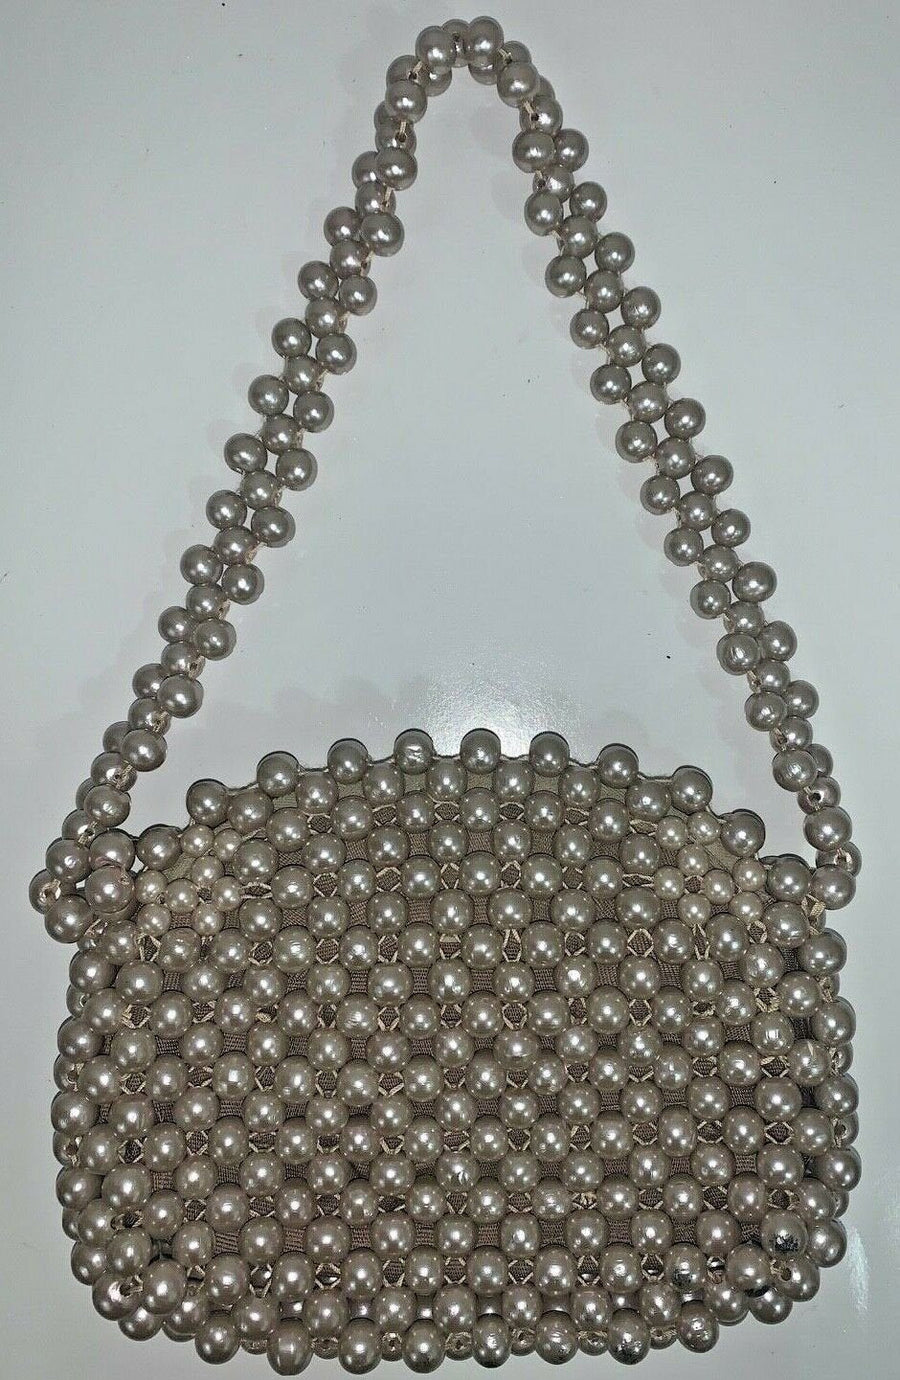 Vintage Cream Wooden Pearl Beaded Purse Handbag Made in Japan